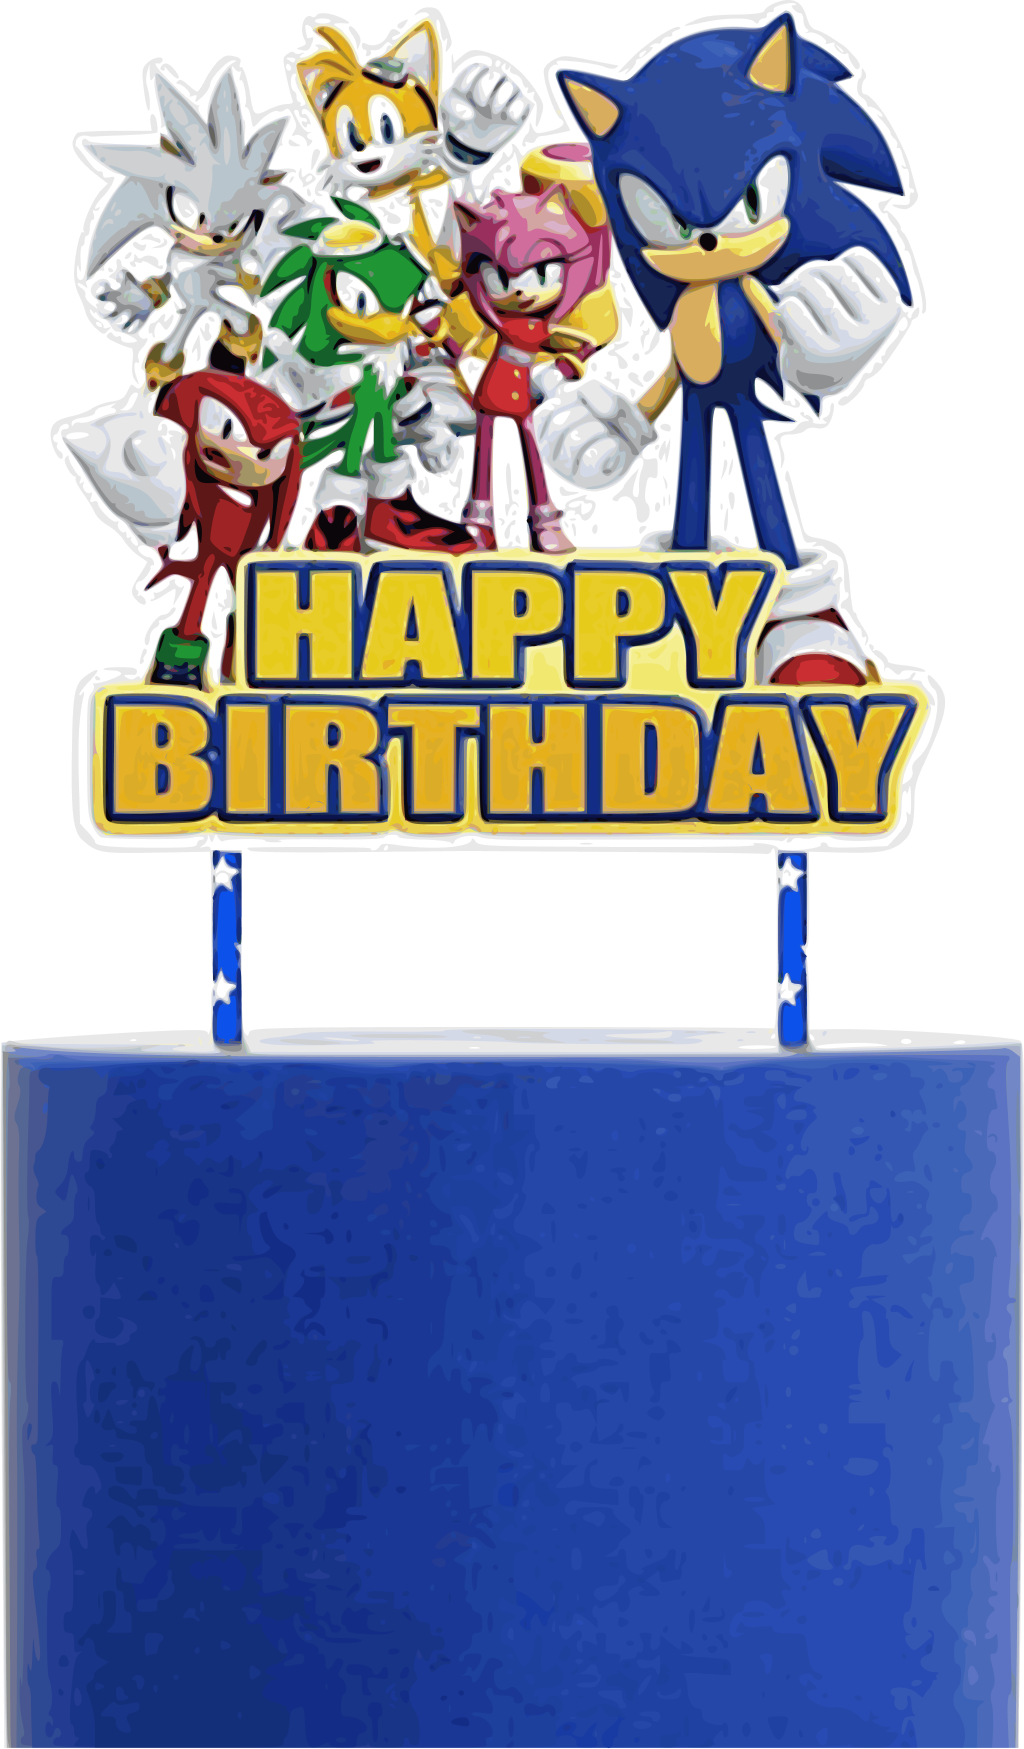 Sonic The Hedgehog - Happy Friday!